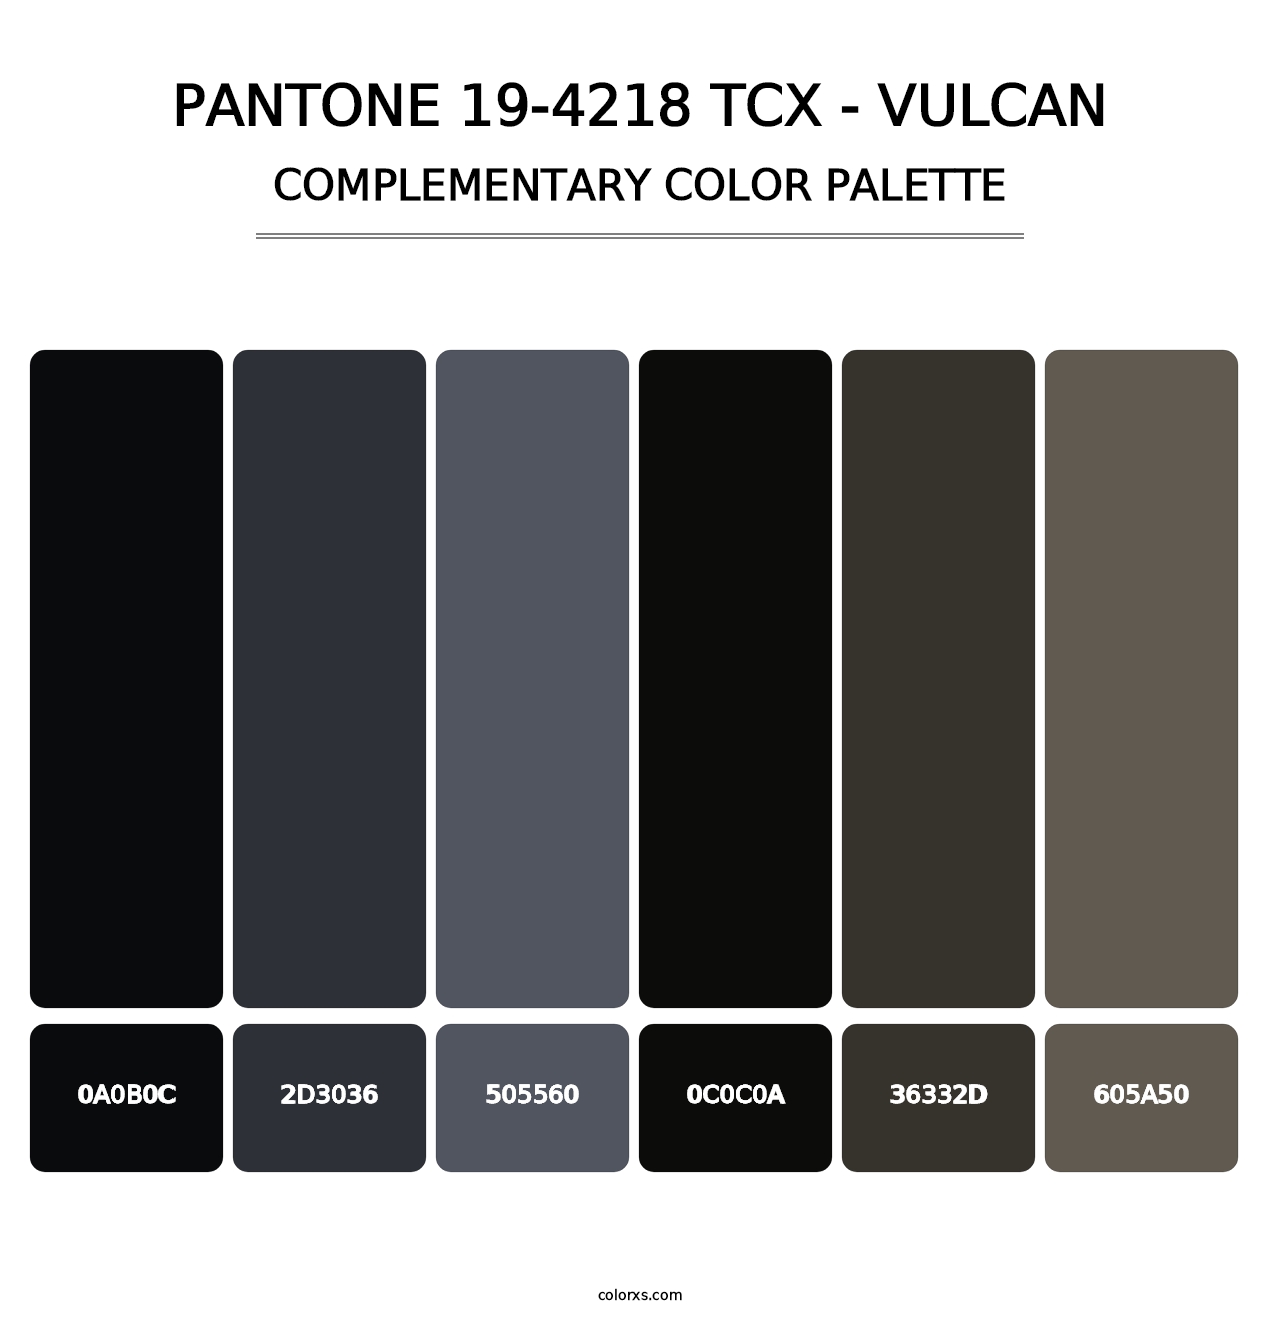 PANTONE 19-4218 TCX - Vulcan - Complementary Color Palette